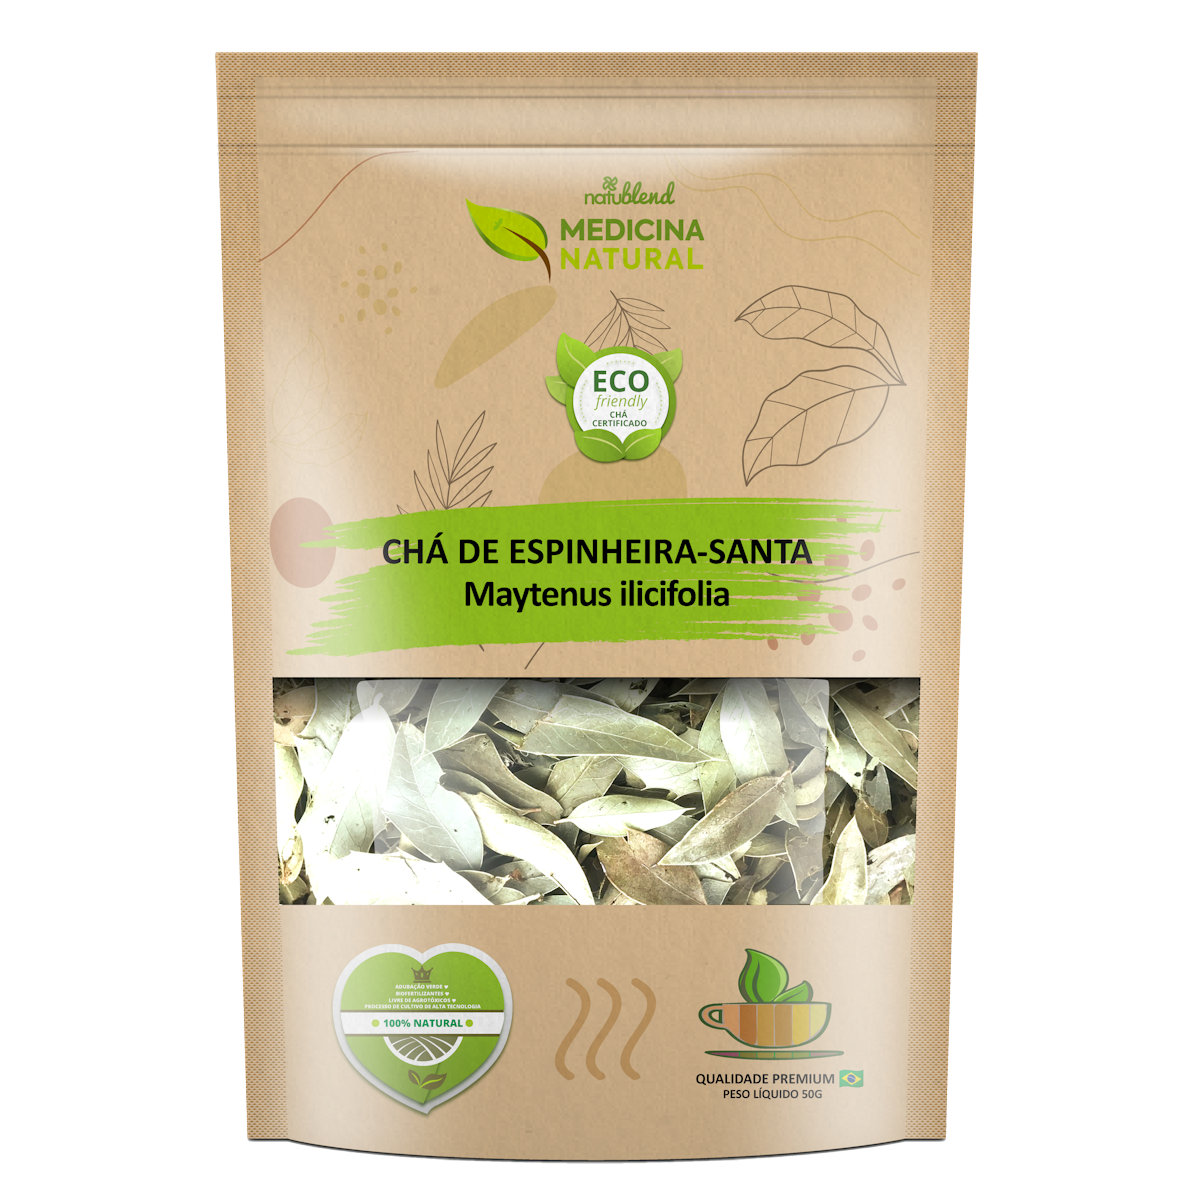 Chá de Espinheira Santa - Maytenus ilicifolia - Medicina Natural